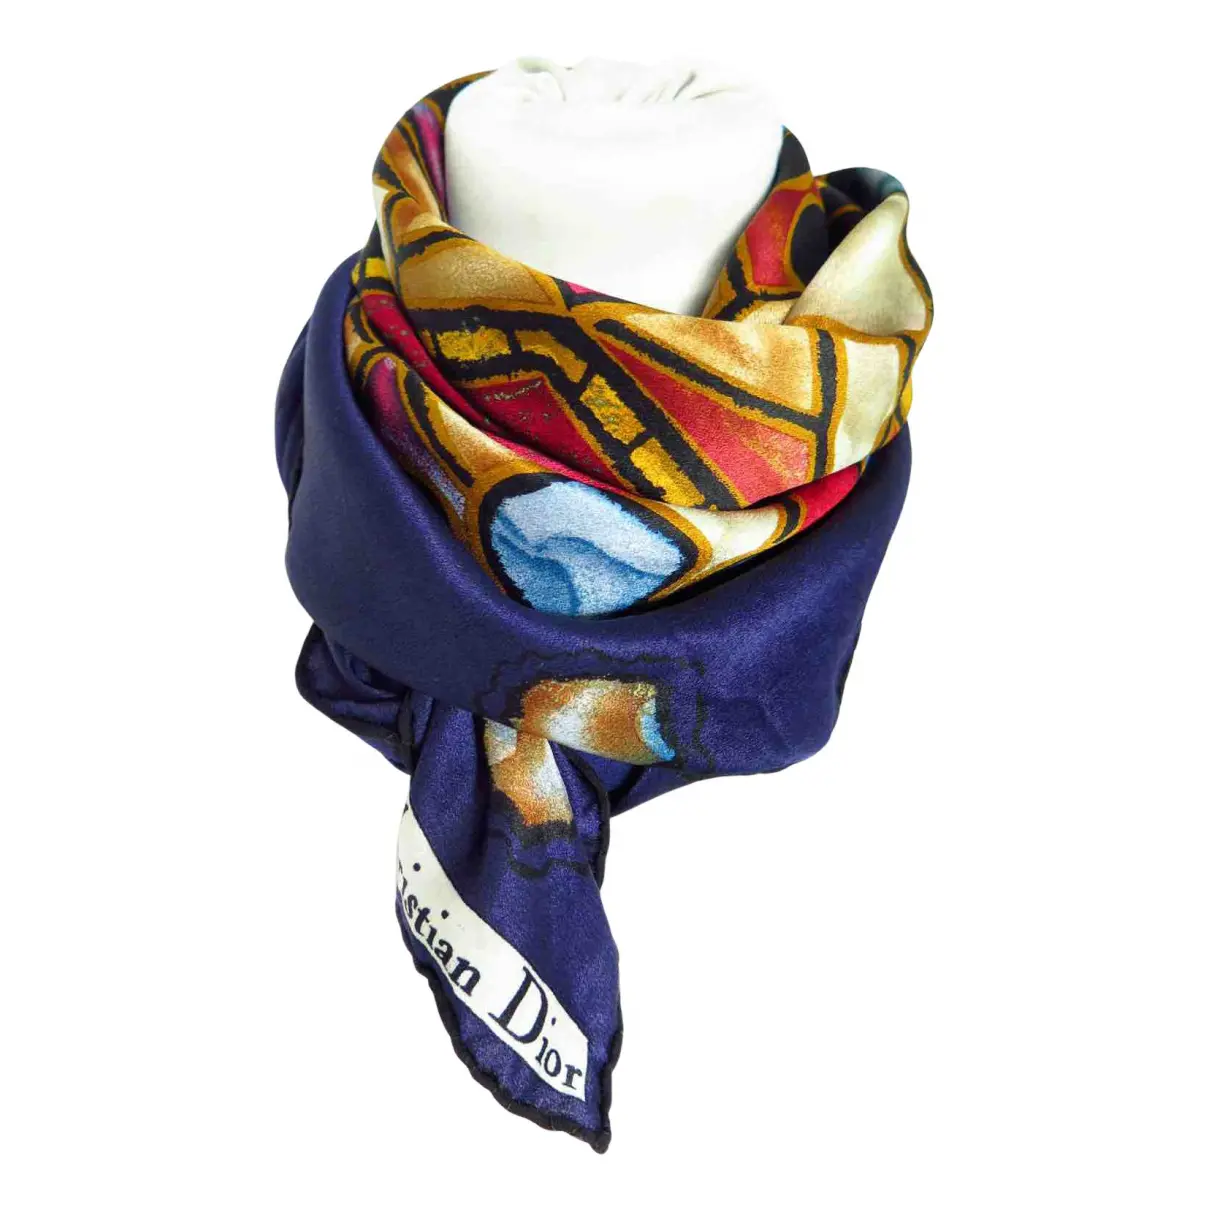 Buy Dior Silk scarf online - Vintage